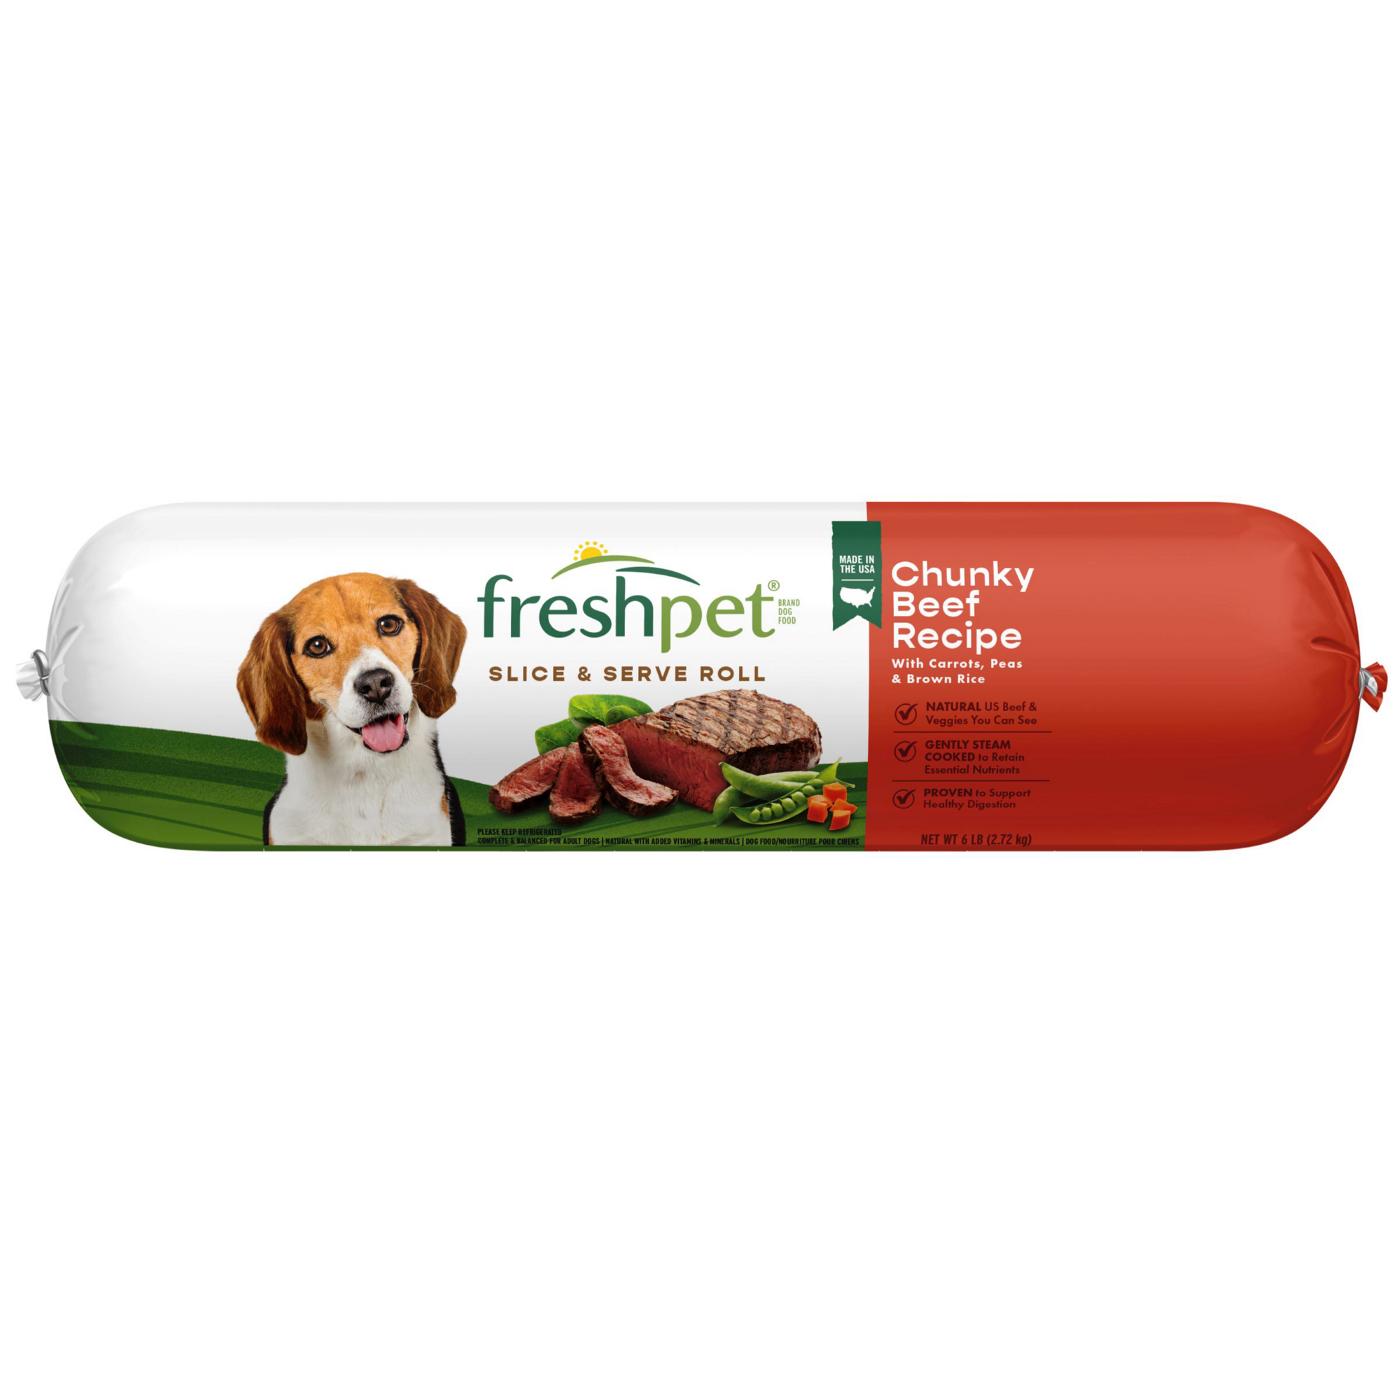 Freshpet Slice & Serve Chunky Beef Fresh Dog Food; image 1 of 7